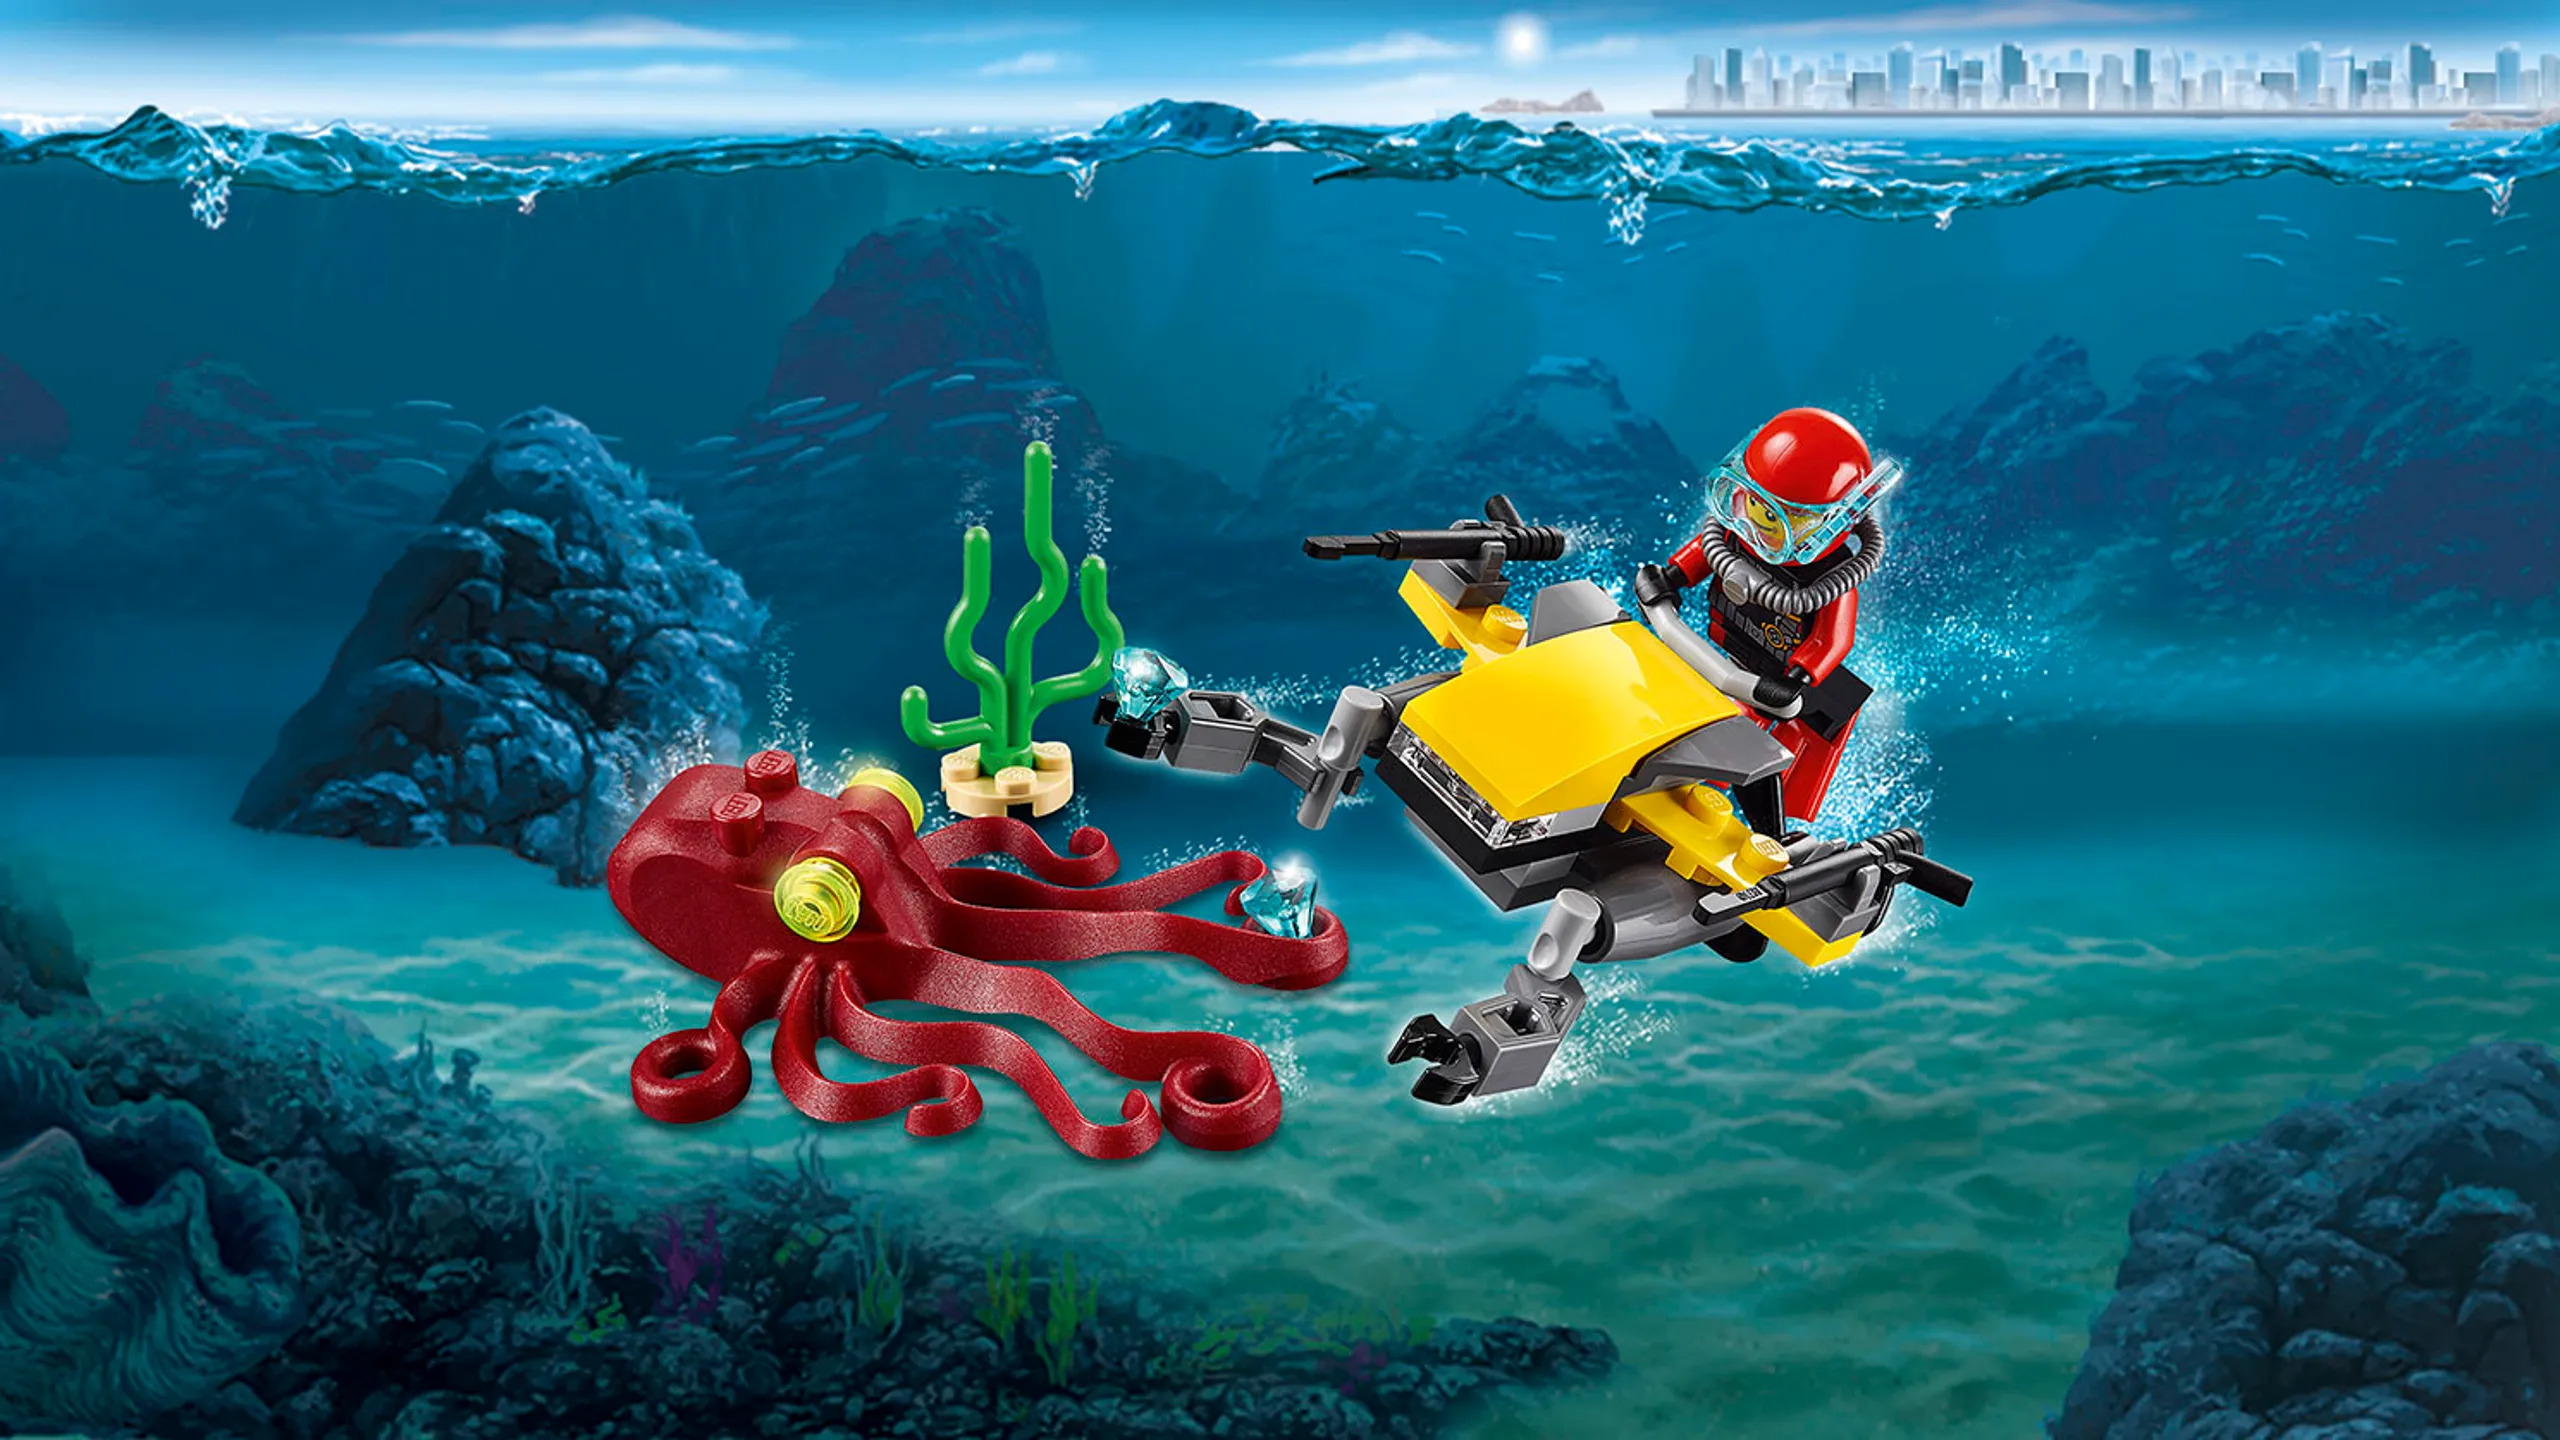 LEGO City Deep Sea squid and scooter driver minifigure - Deep Sea Scuba Scooter 60090